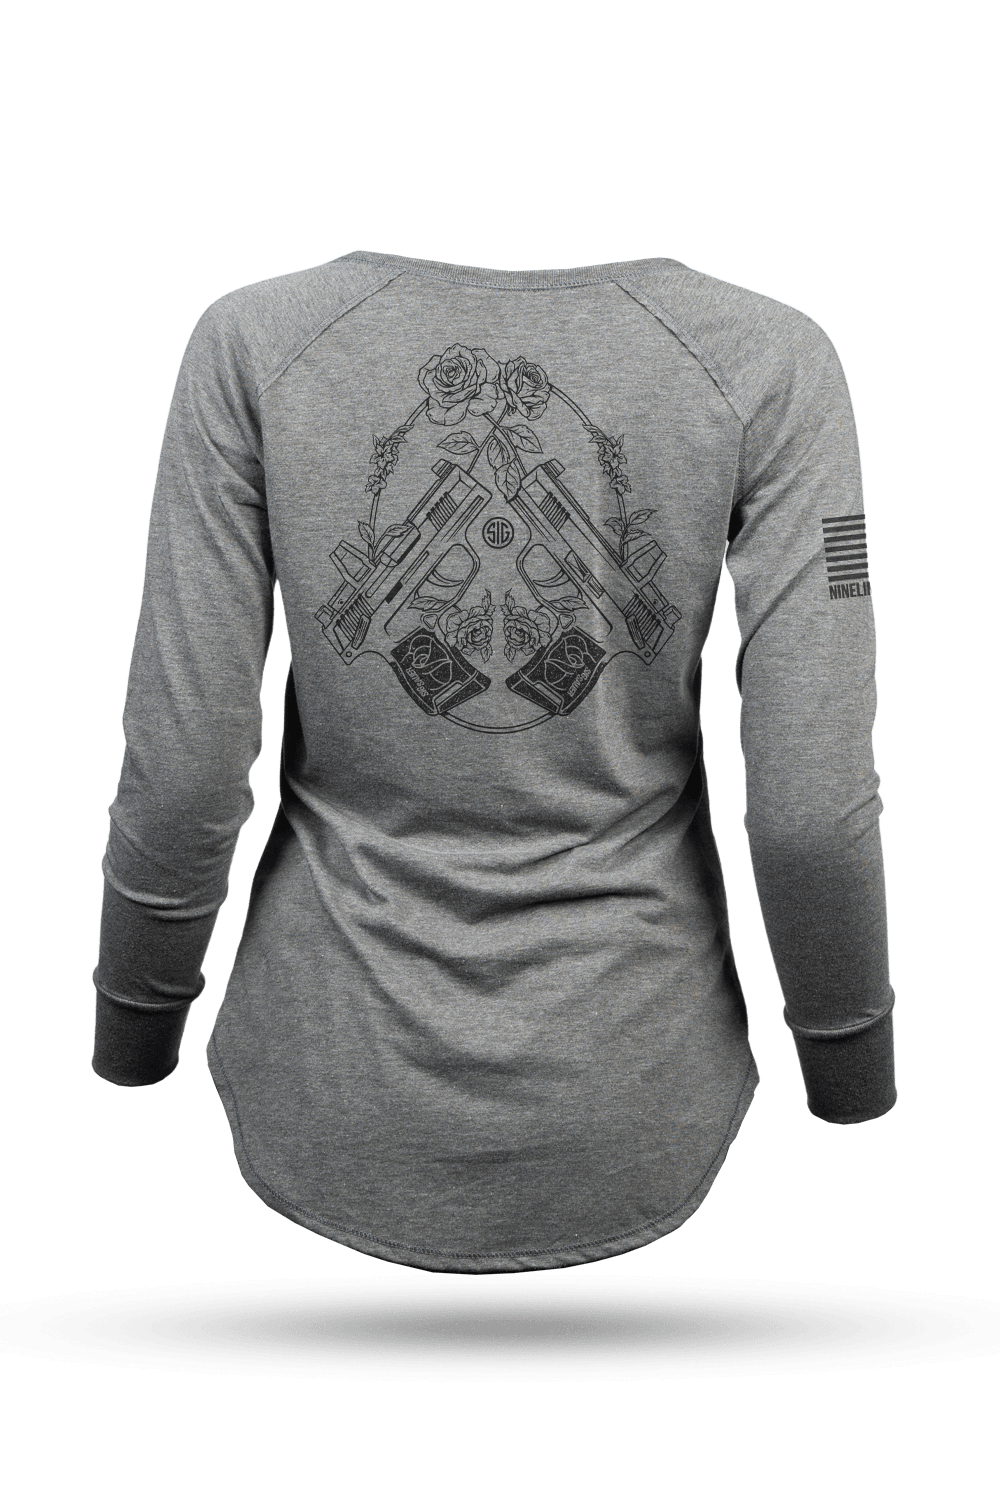 Women's Long-Sleeve Shirt - Sig Rose V2